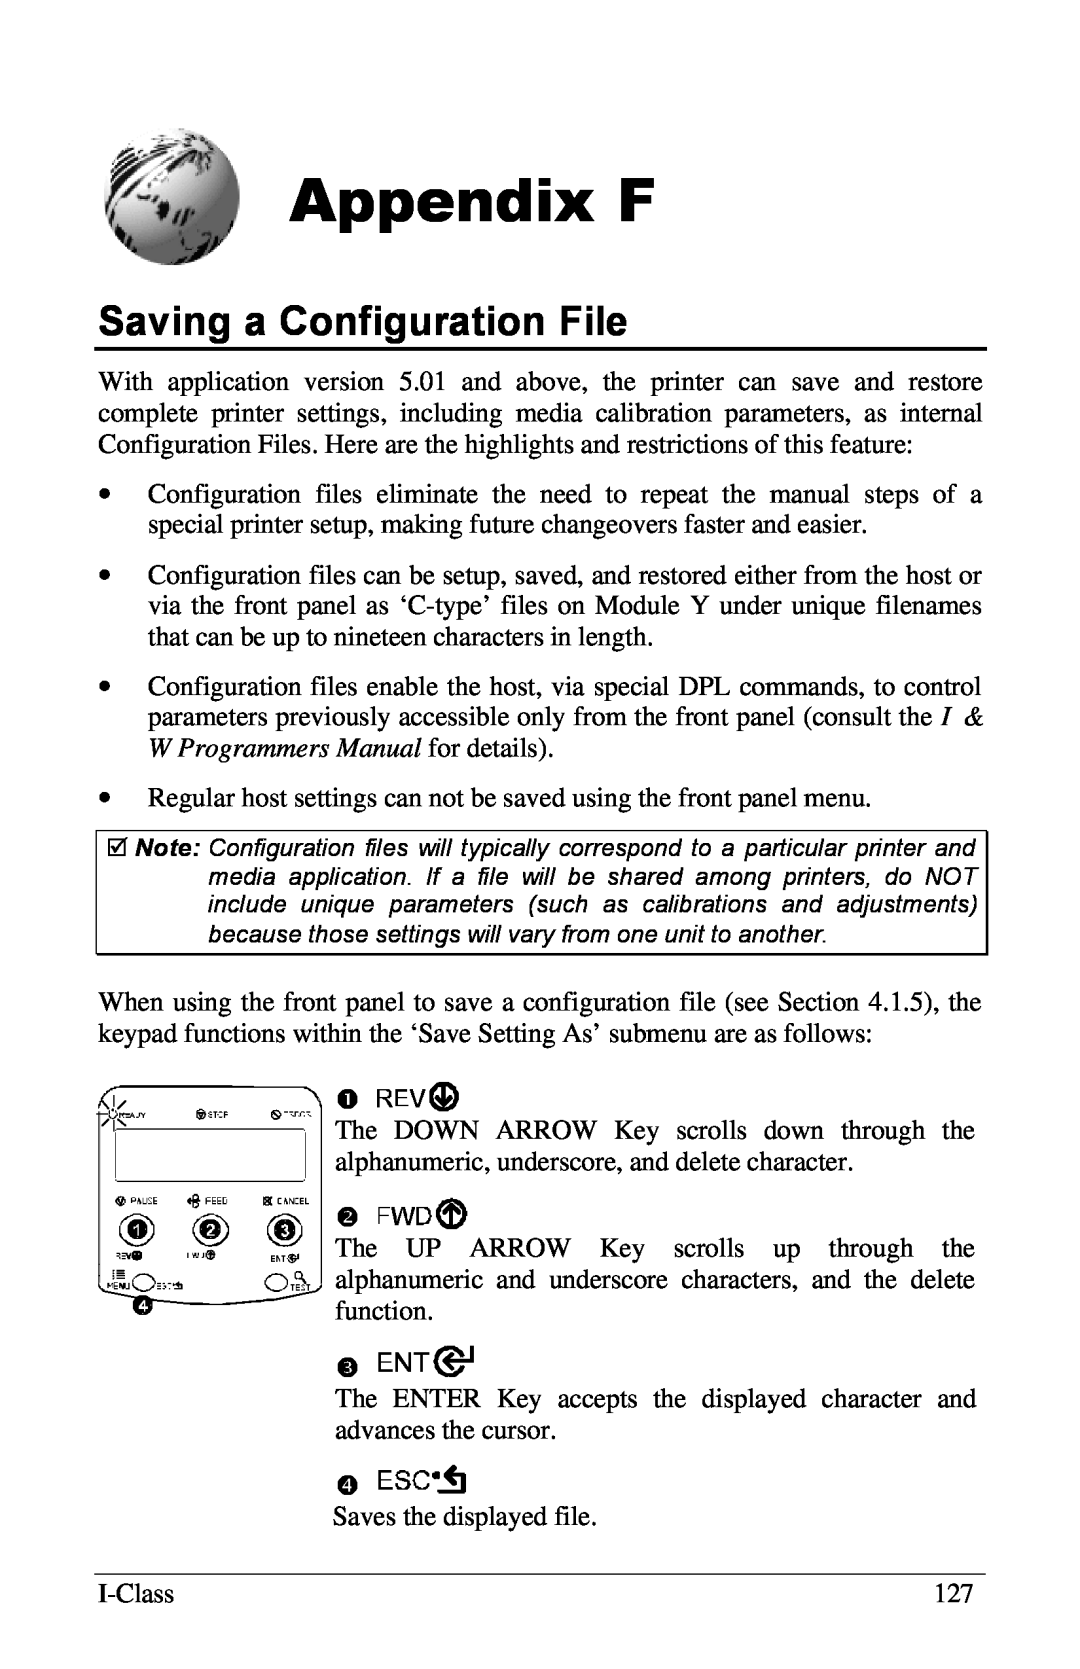 Xerox I Class manual Appendix F, Saving a Configuration File 